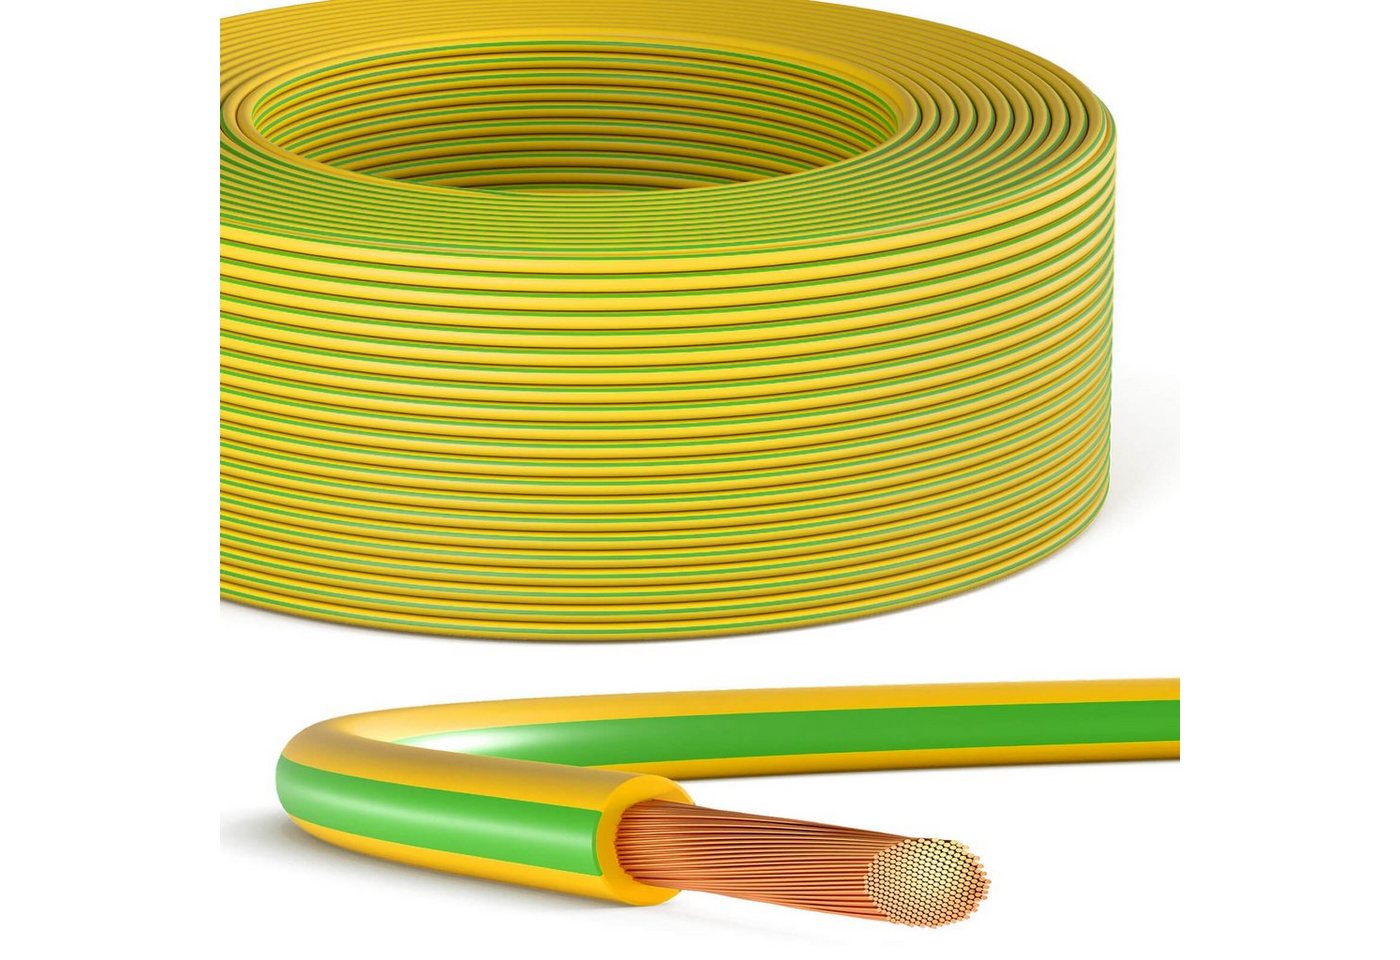 HB-DIGITAL Erdungskabel 10mm2 PVC Aderleitung H07V-K flexibles Kabel grün-gelb Stromkabel, (500 cm), flexible Design, PVC-Isoliermantel von HB-DIGITAL